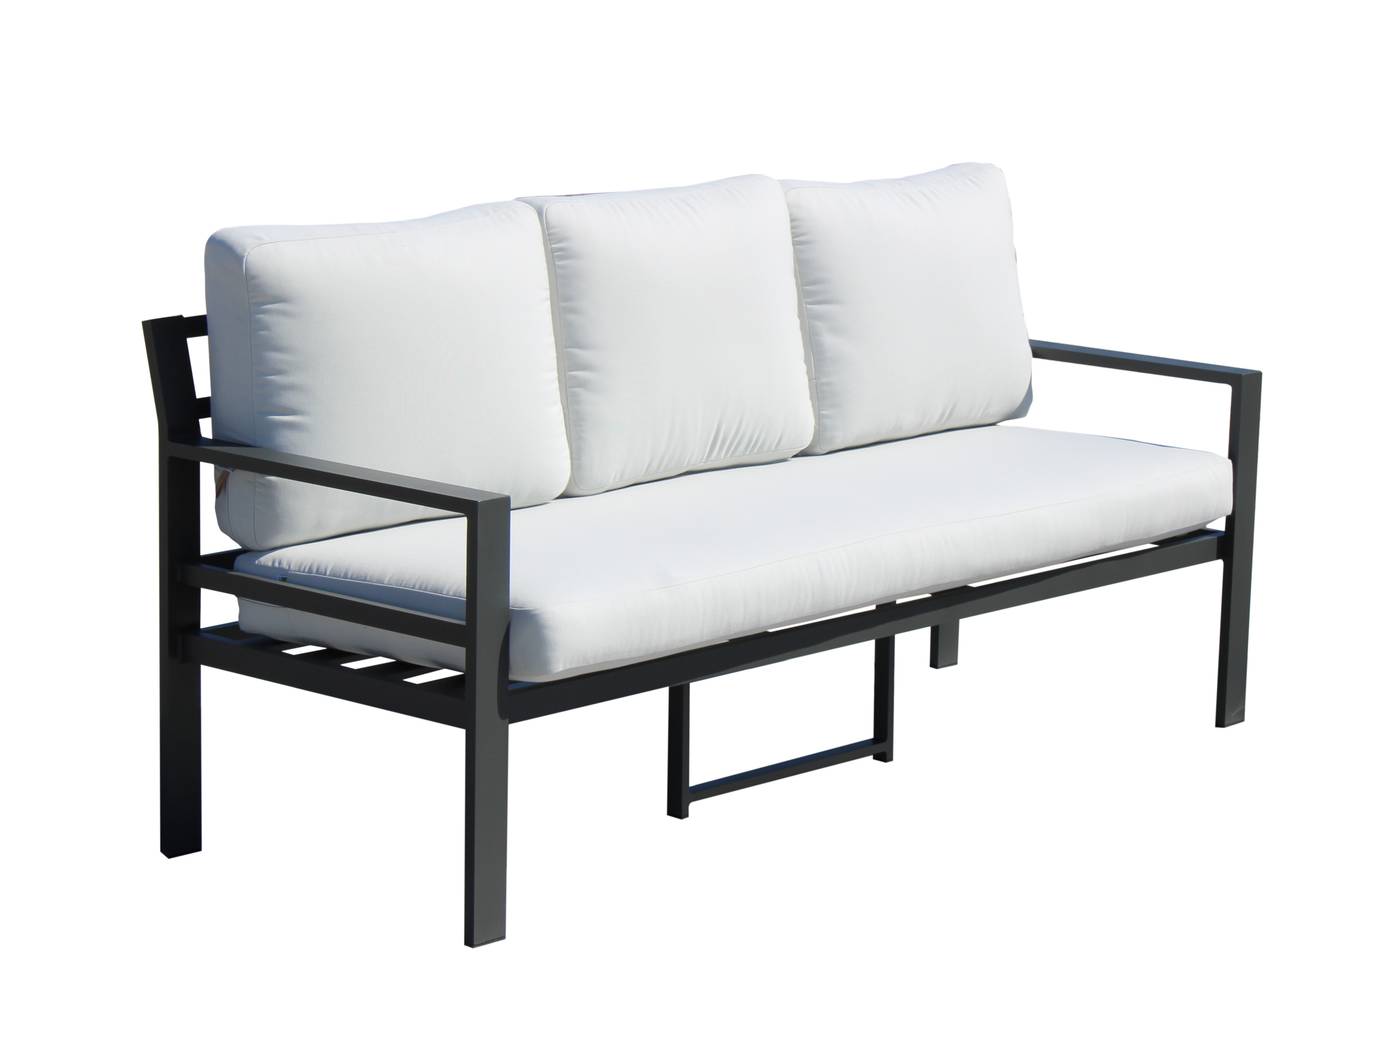 Set Aluminio Luxe Glembor-8 - Conjunto aluminio: 1 sofá 3 plazas + 2 sillones + 1 mesa de centro. Disponible en color blanco, antracita, champagne, plata o marrón.